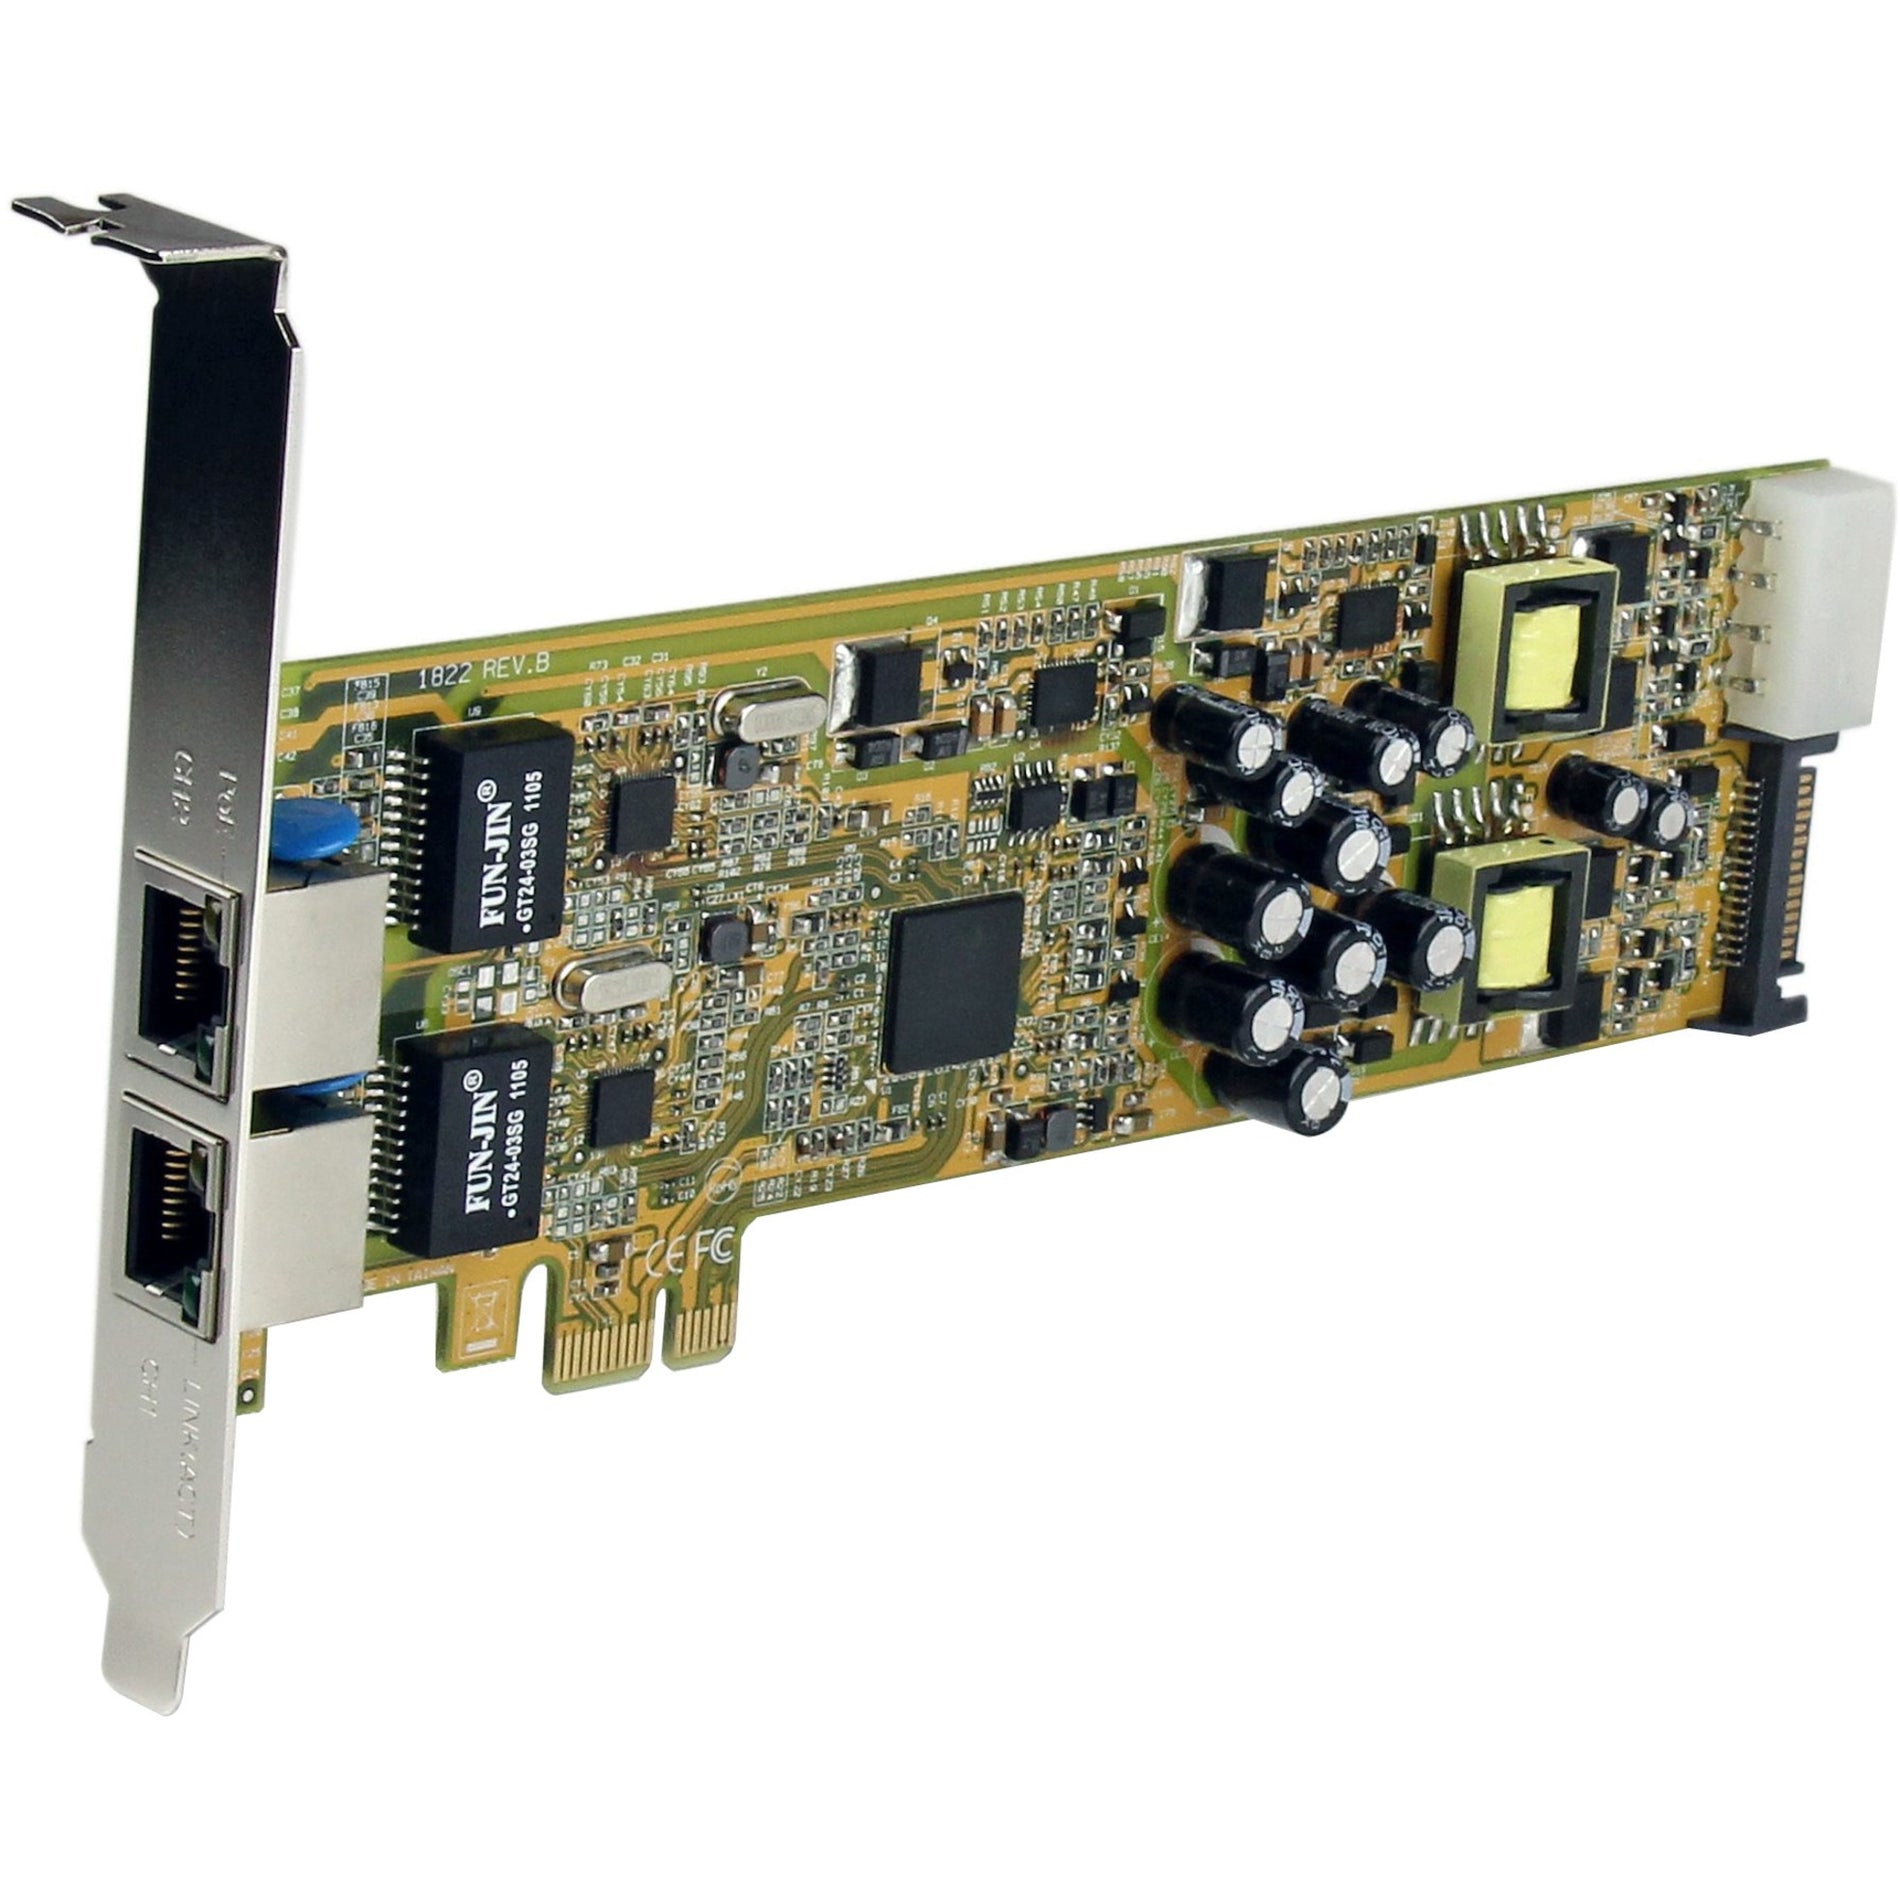 StarTech.com ST2000PEXPSE Dual Port PCI Express Gigabit Ethernet PCIe Network Card Adapter - PoE/PSE, High-Speed Internet Connectivity for Your PC